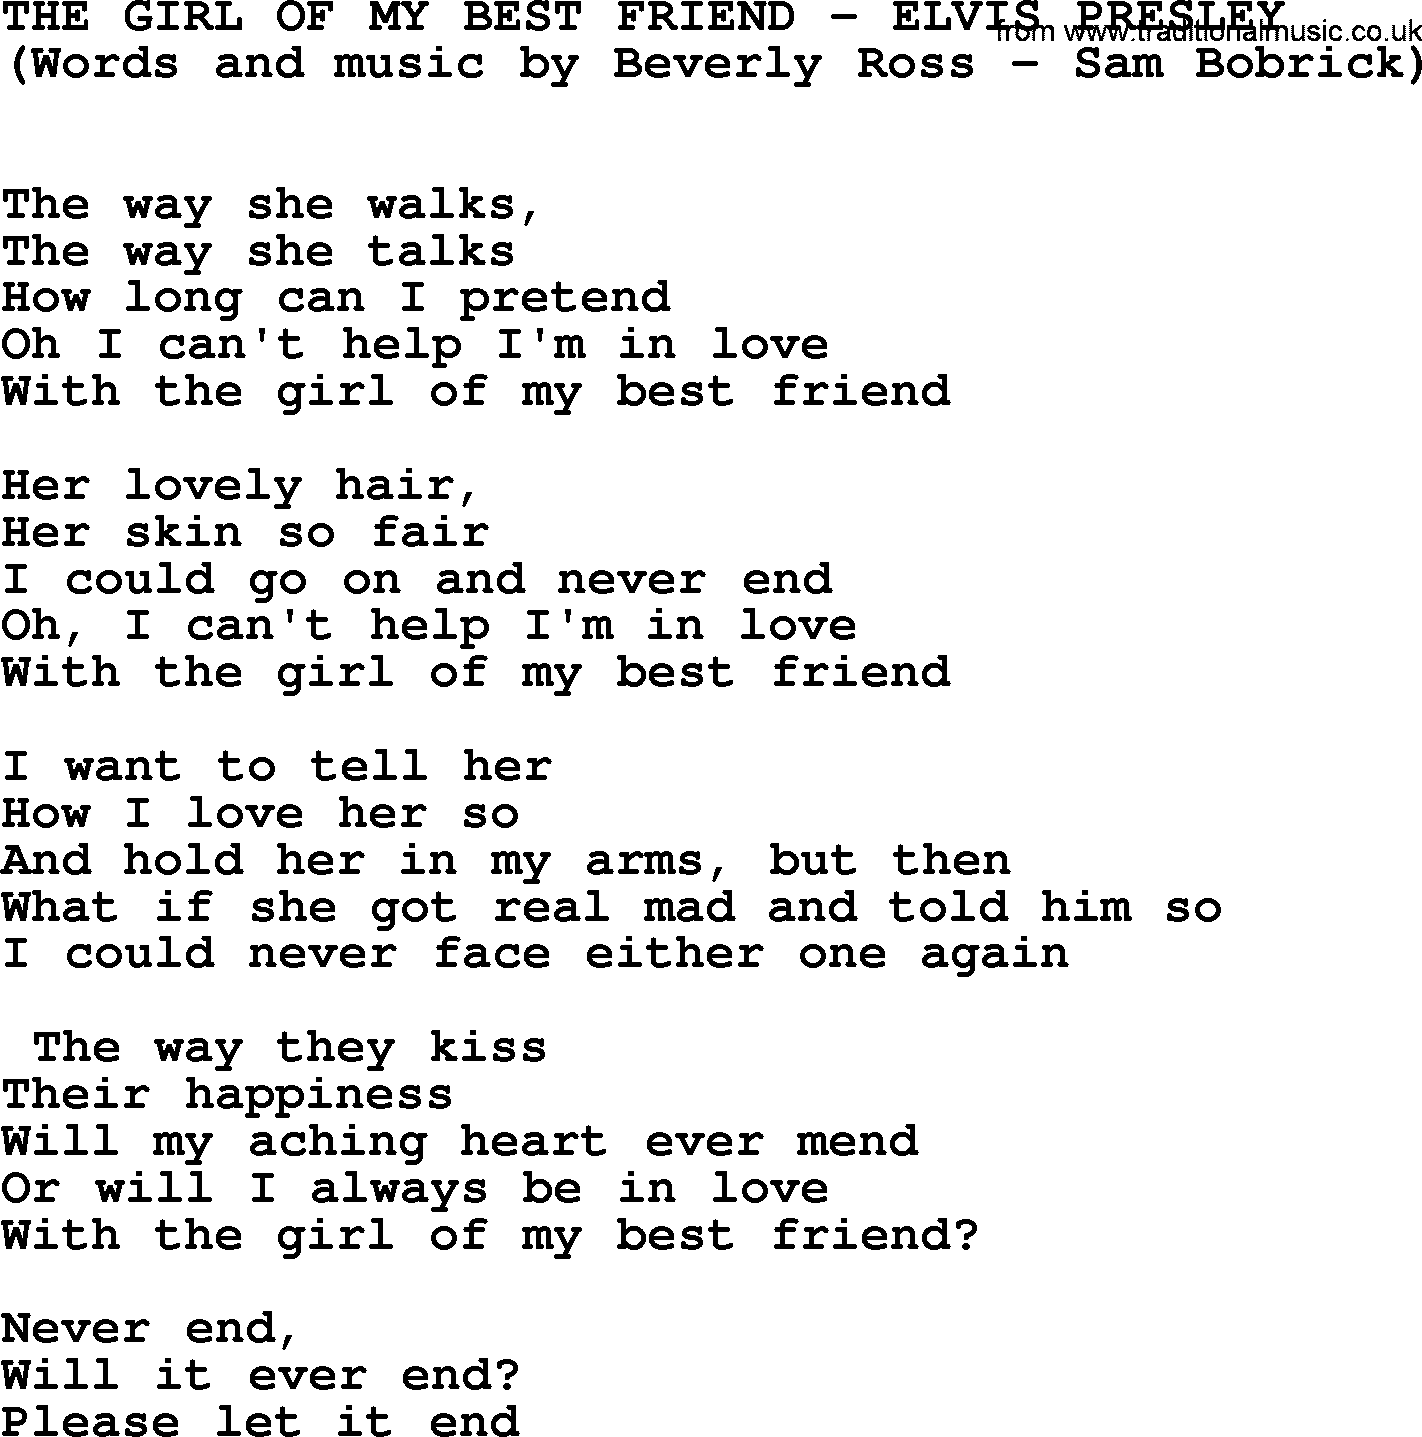 The Girl Of My Best Friend by Elvis Presley - lyrics